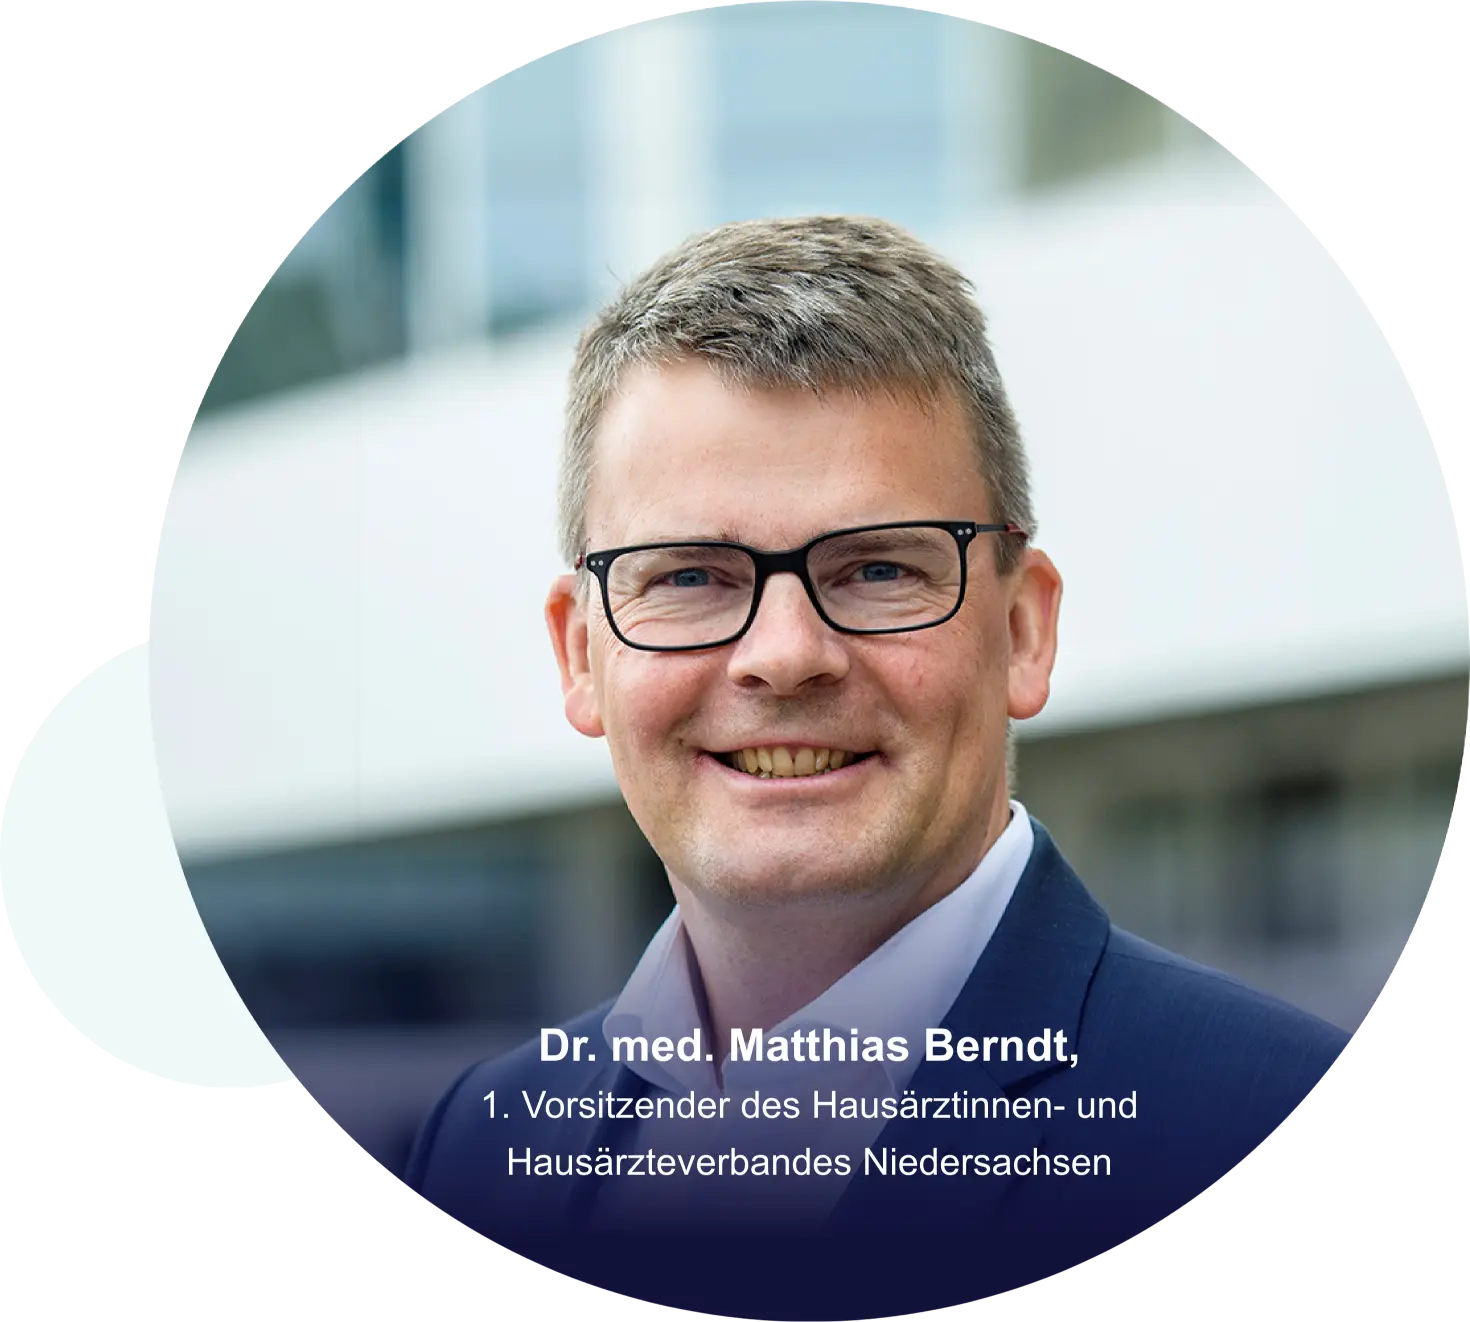 Dr. med. Matthias Berndt